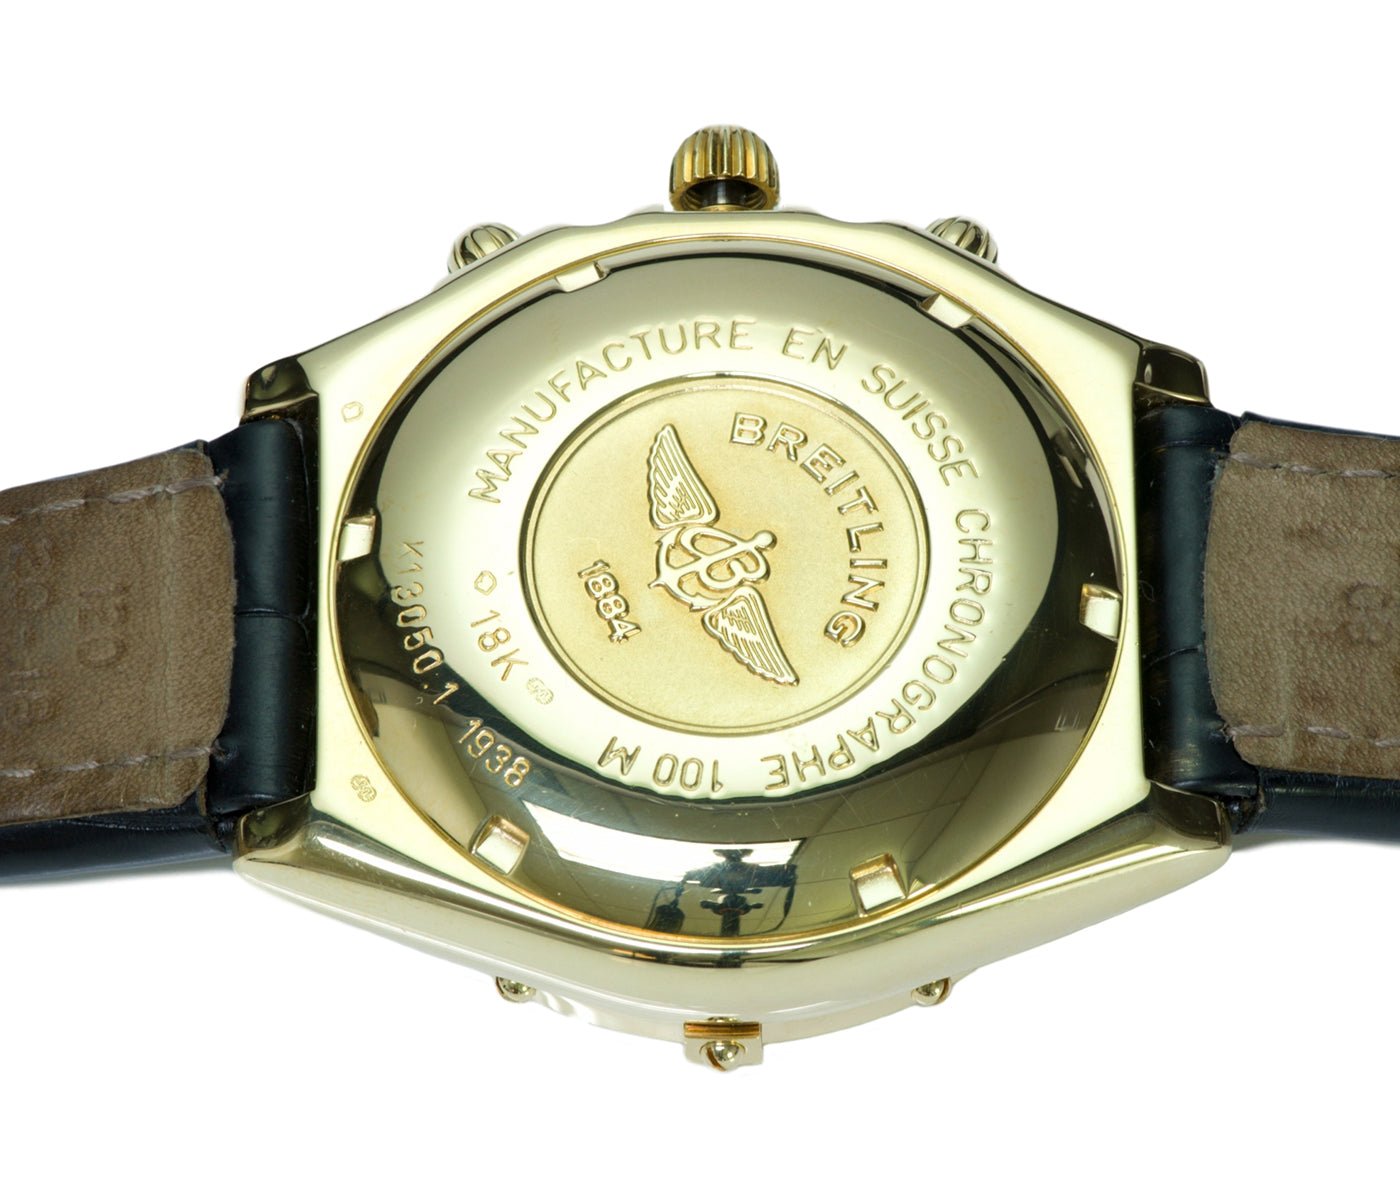 Breitling Chronomat Vitesse K13050.1 18K Gold Automatic Watch - DSF Antique Jewelry